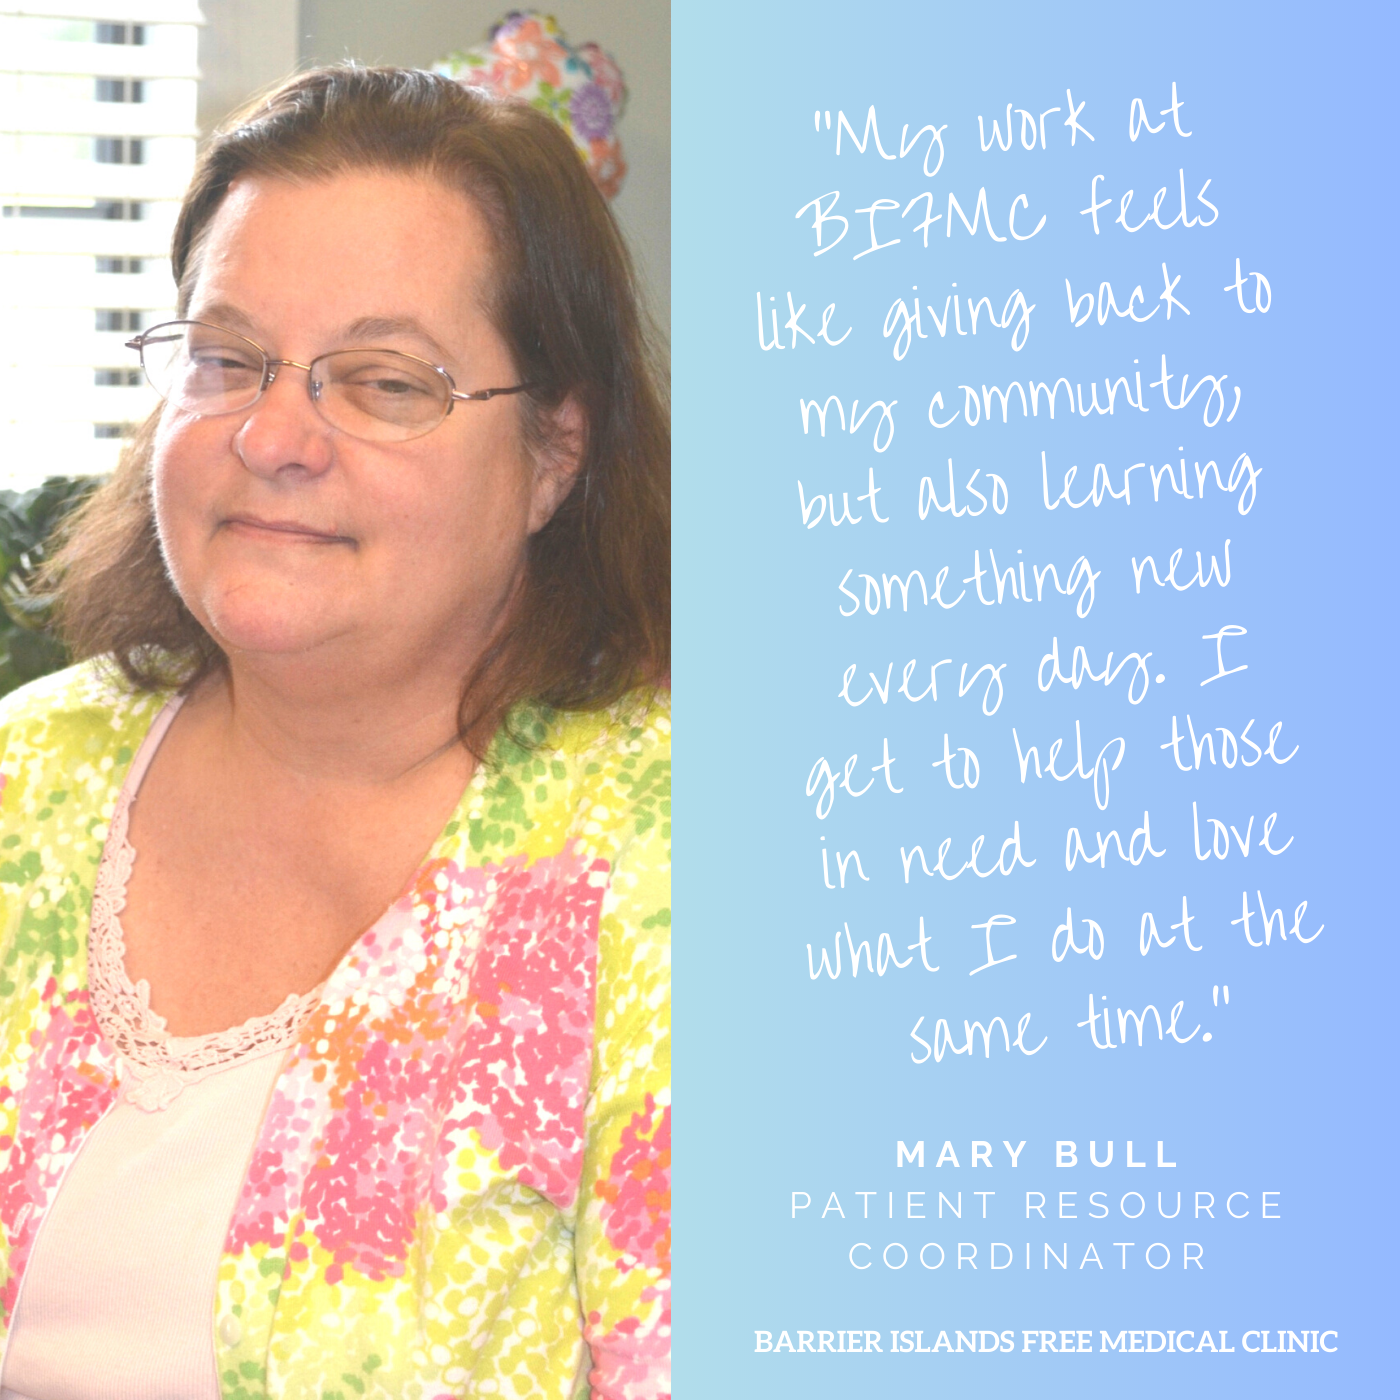 Mary Bull, Patient Resource Coordinator